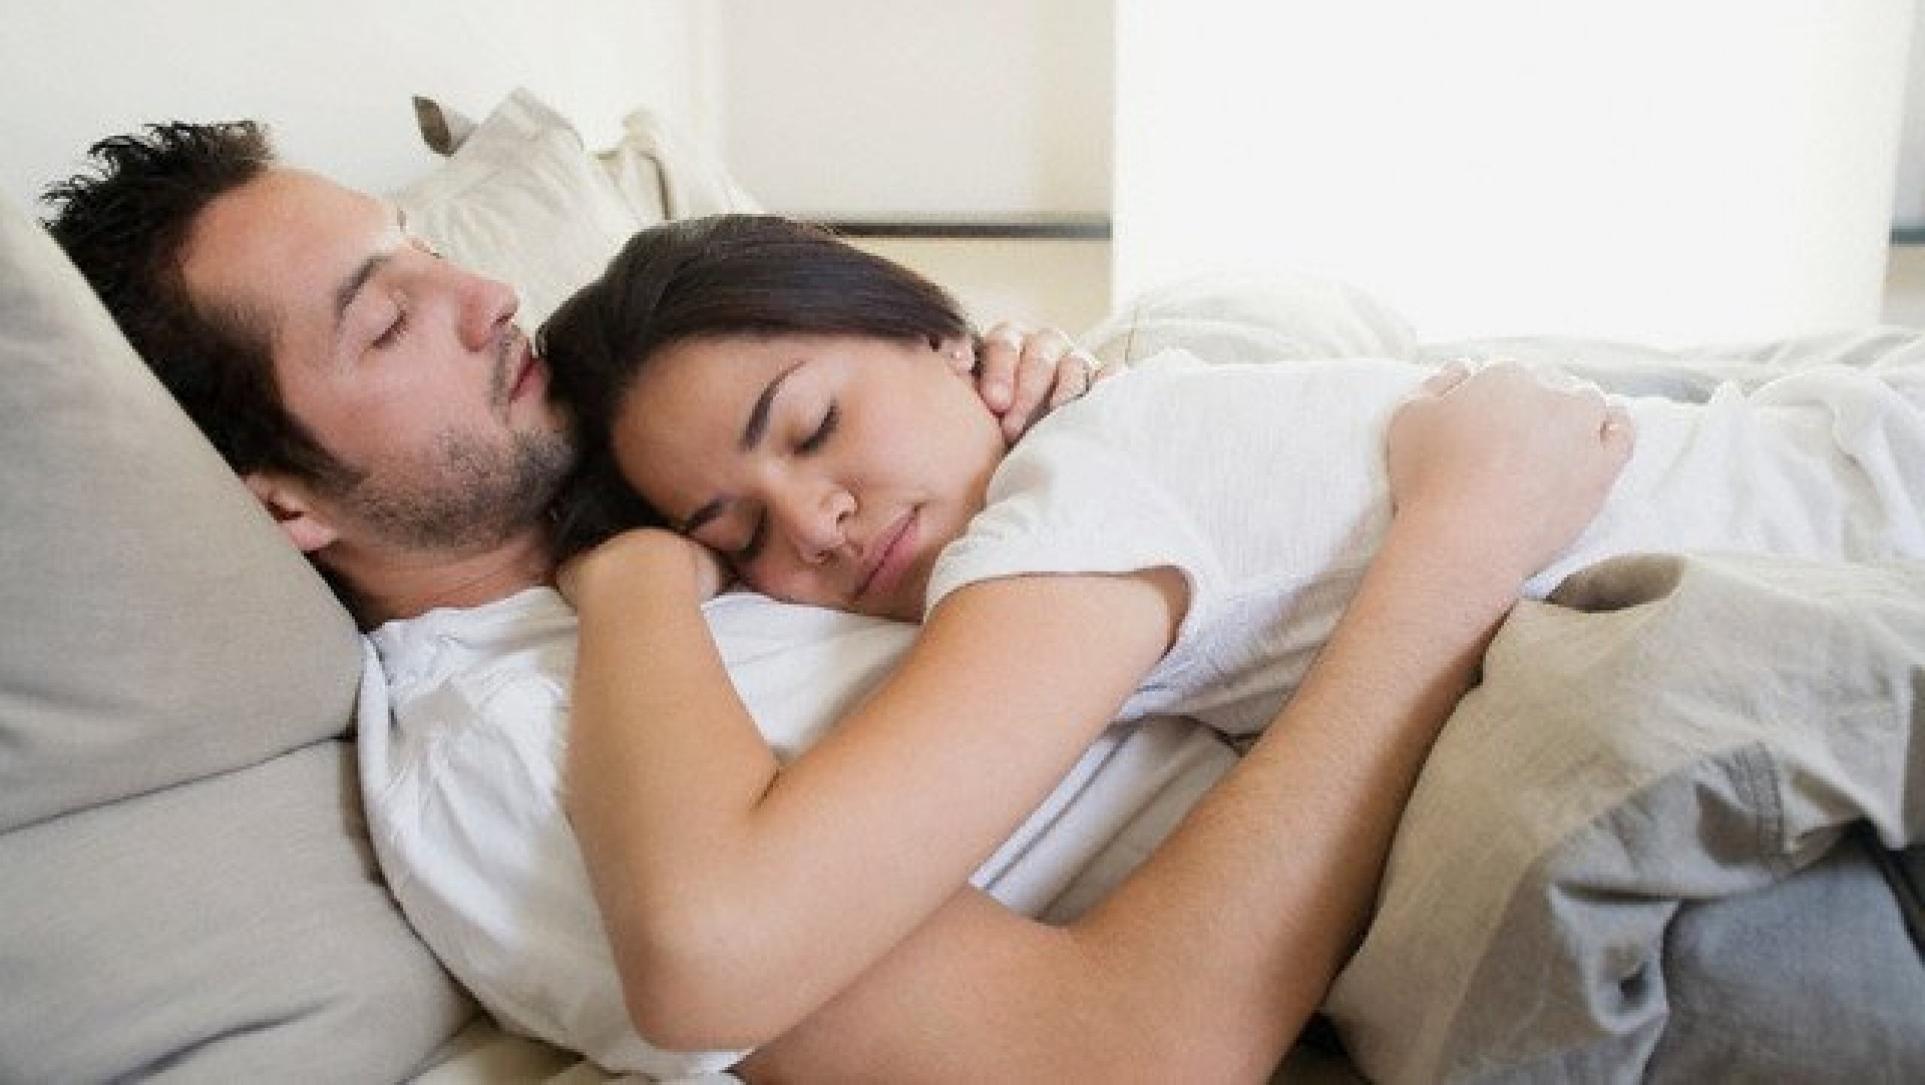 husband wife wallpaper,sleep,nap,comfort,bedtime,child